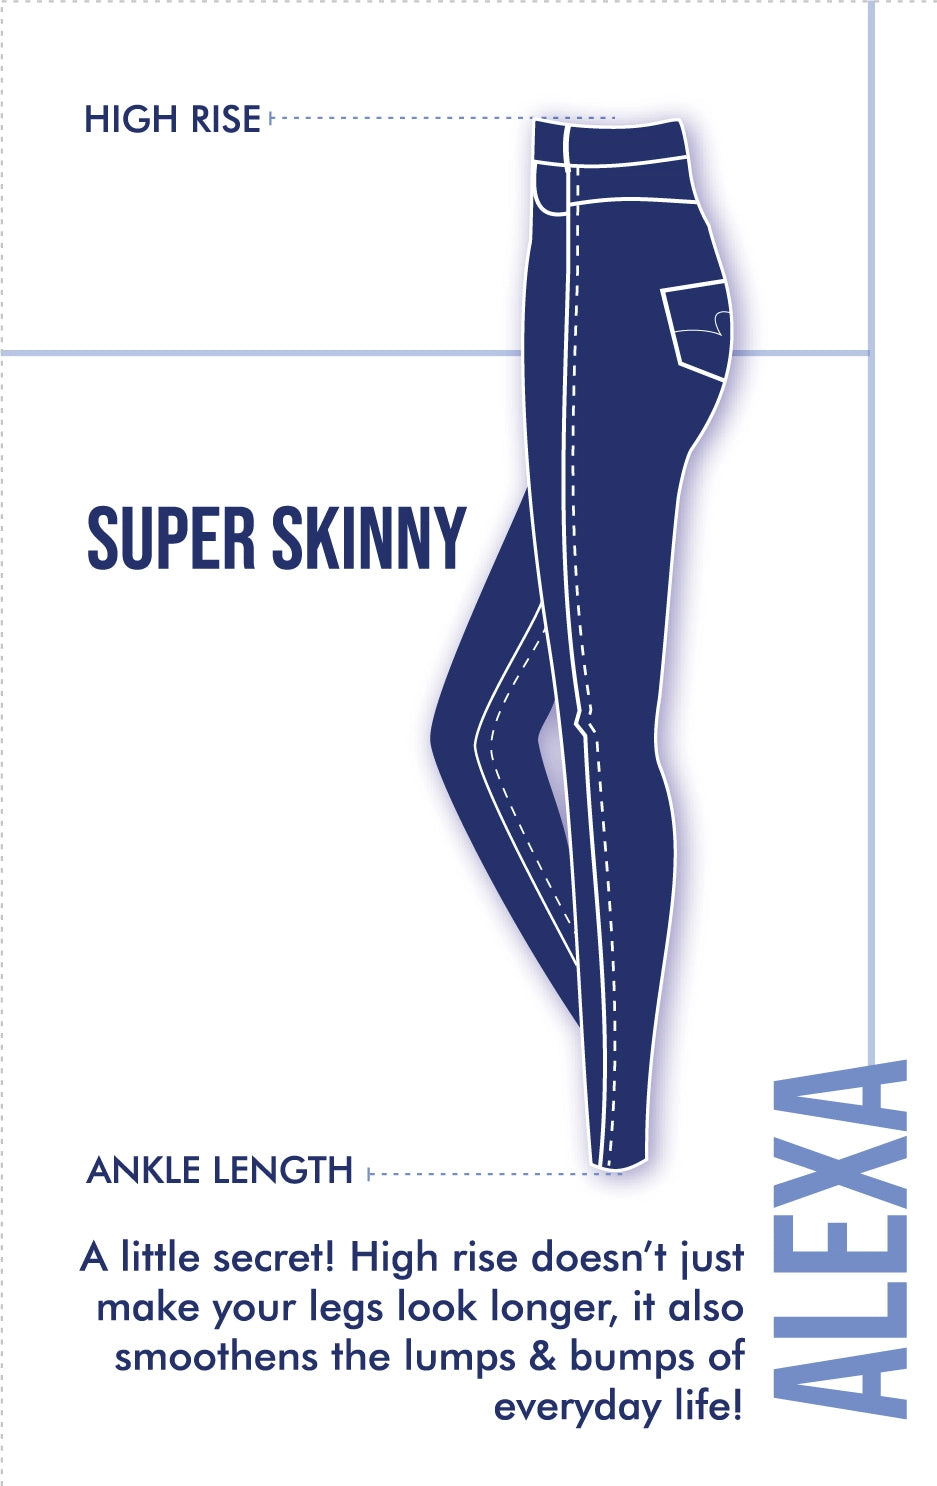 Spykar Women Mid Blue Lycra Super Skinny Fit Ankle Length Clean Look Jeans -(Alexa)